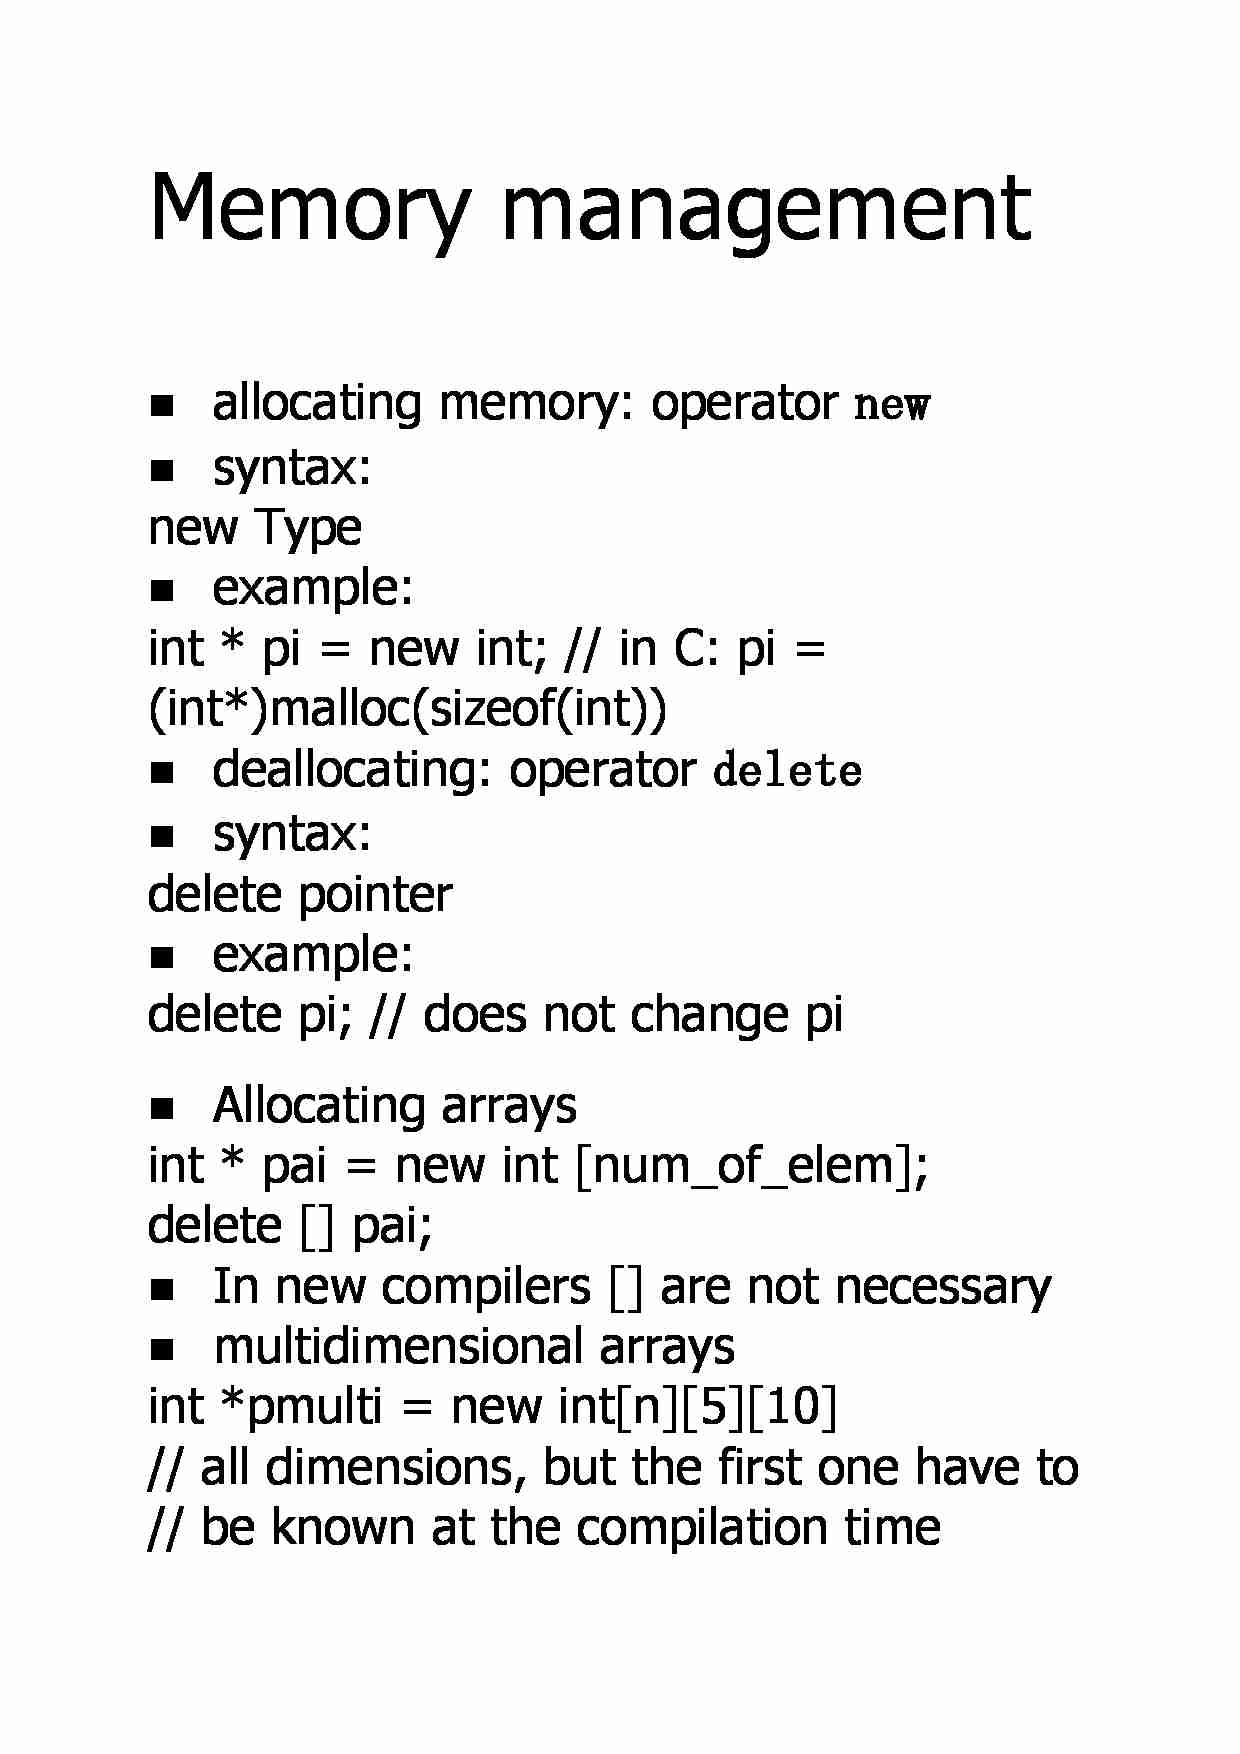 Memory management - strona 1